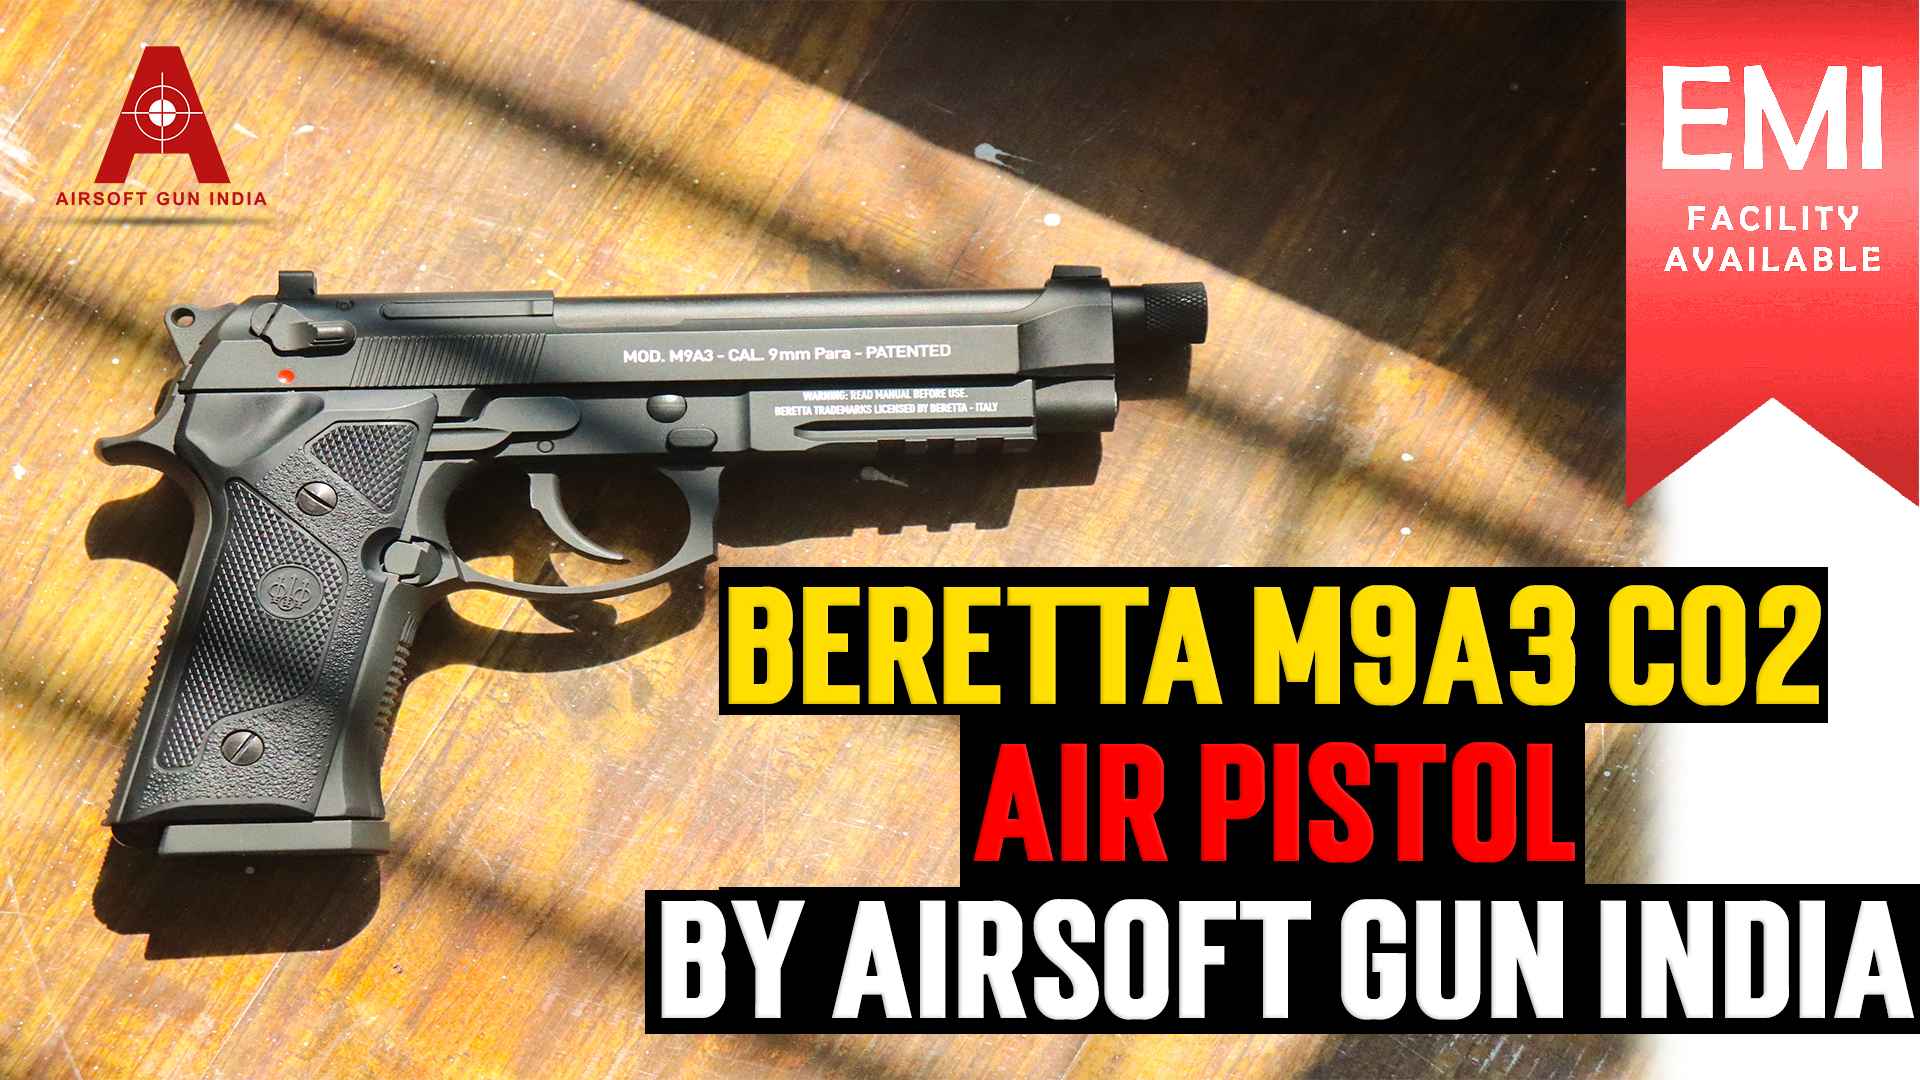 Airsoft Gun India